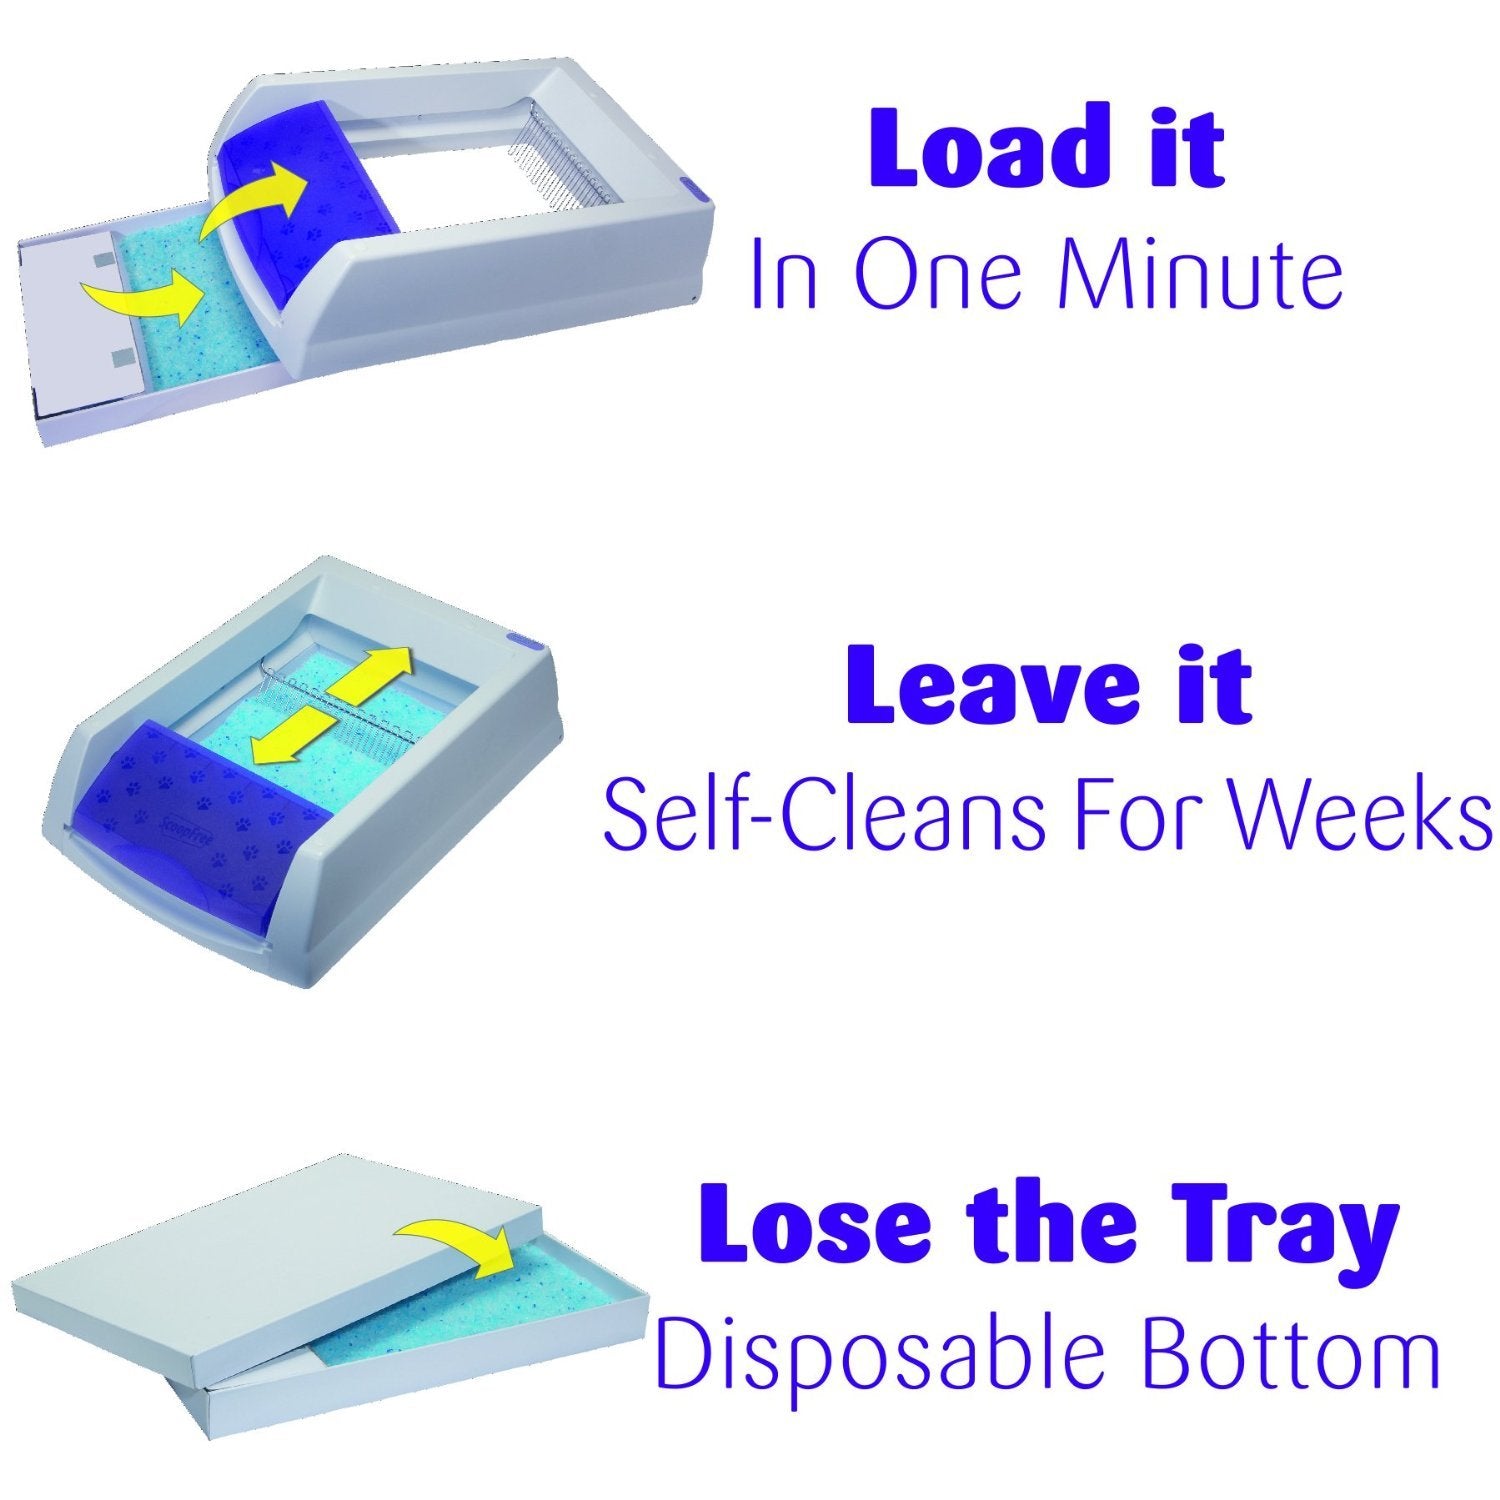 PetSafe ScoopFree Litterbox Trays (Premium Blue Crystal) - 3-Pack